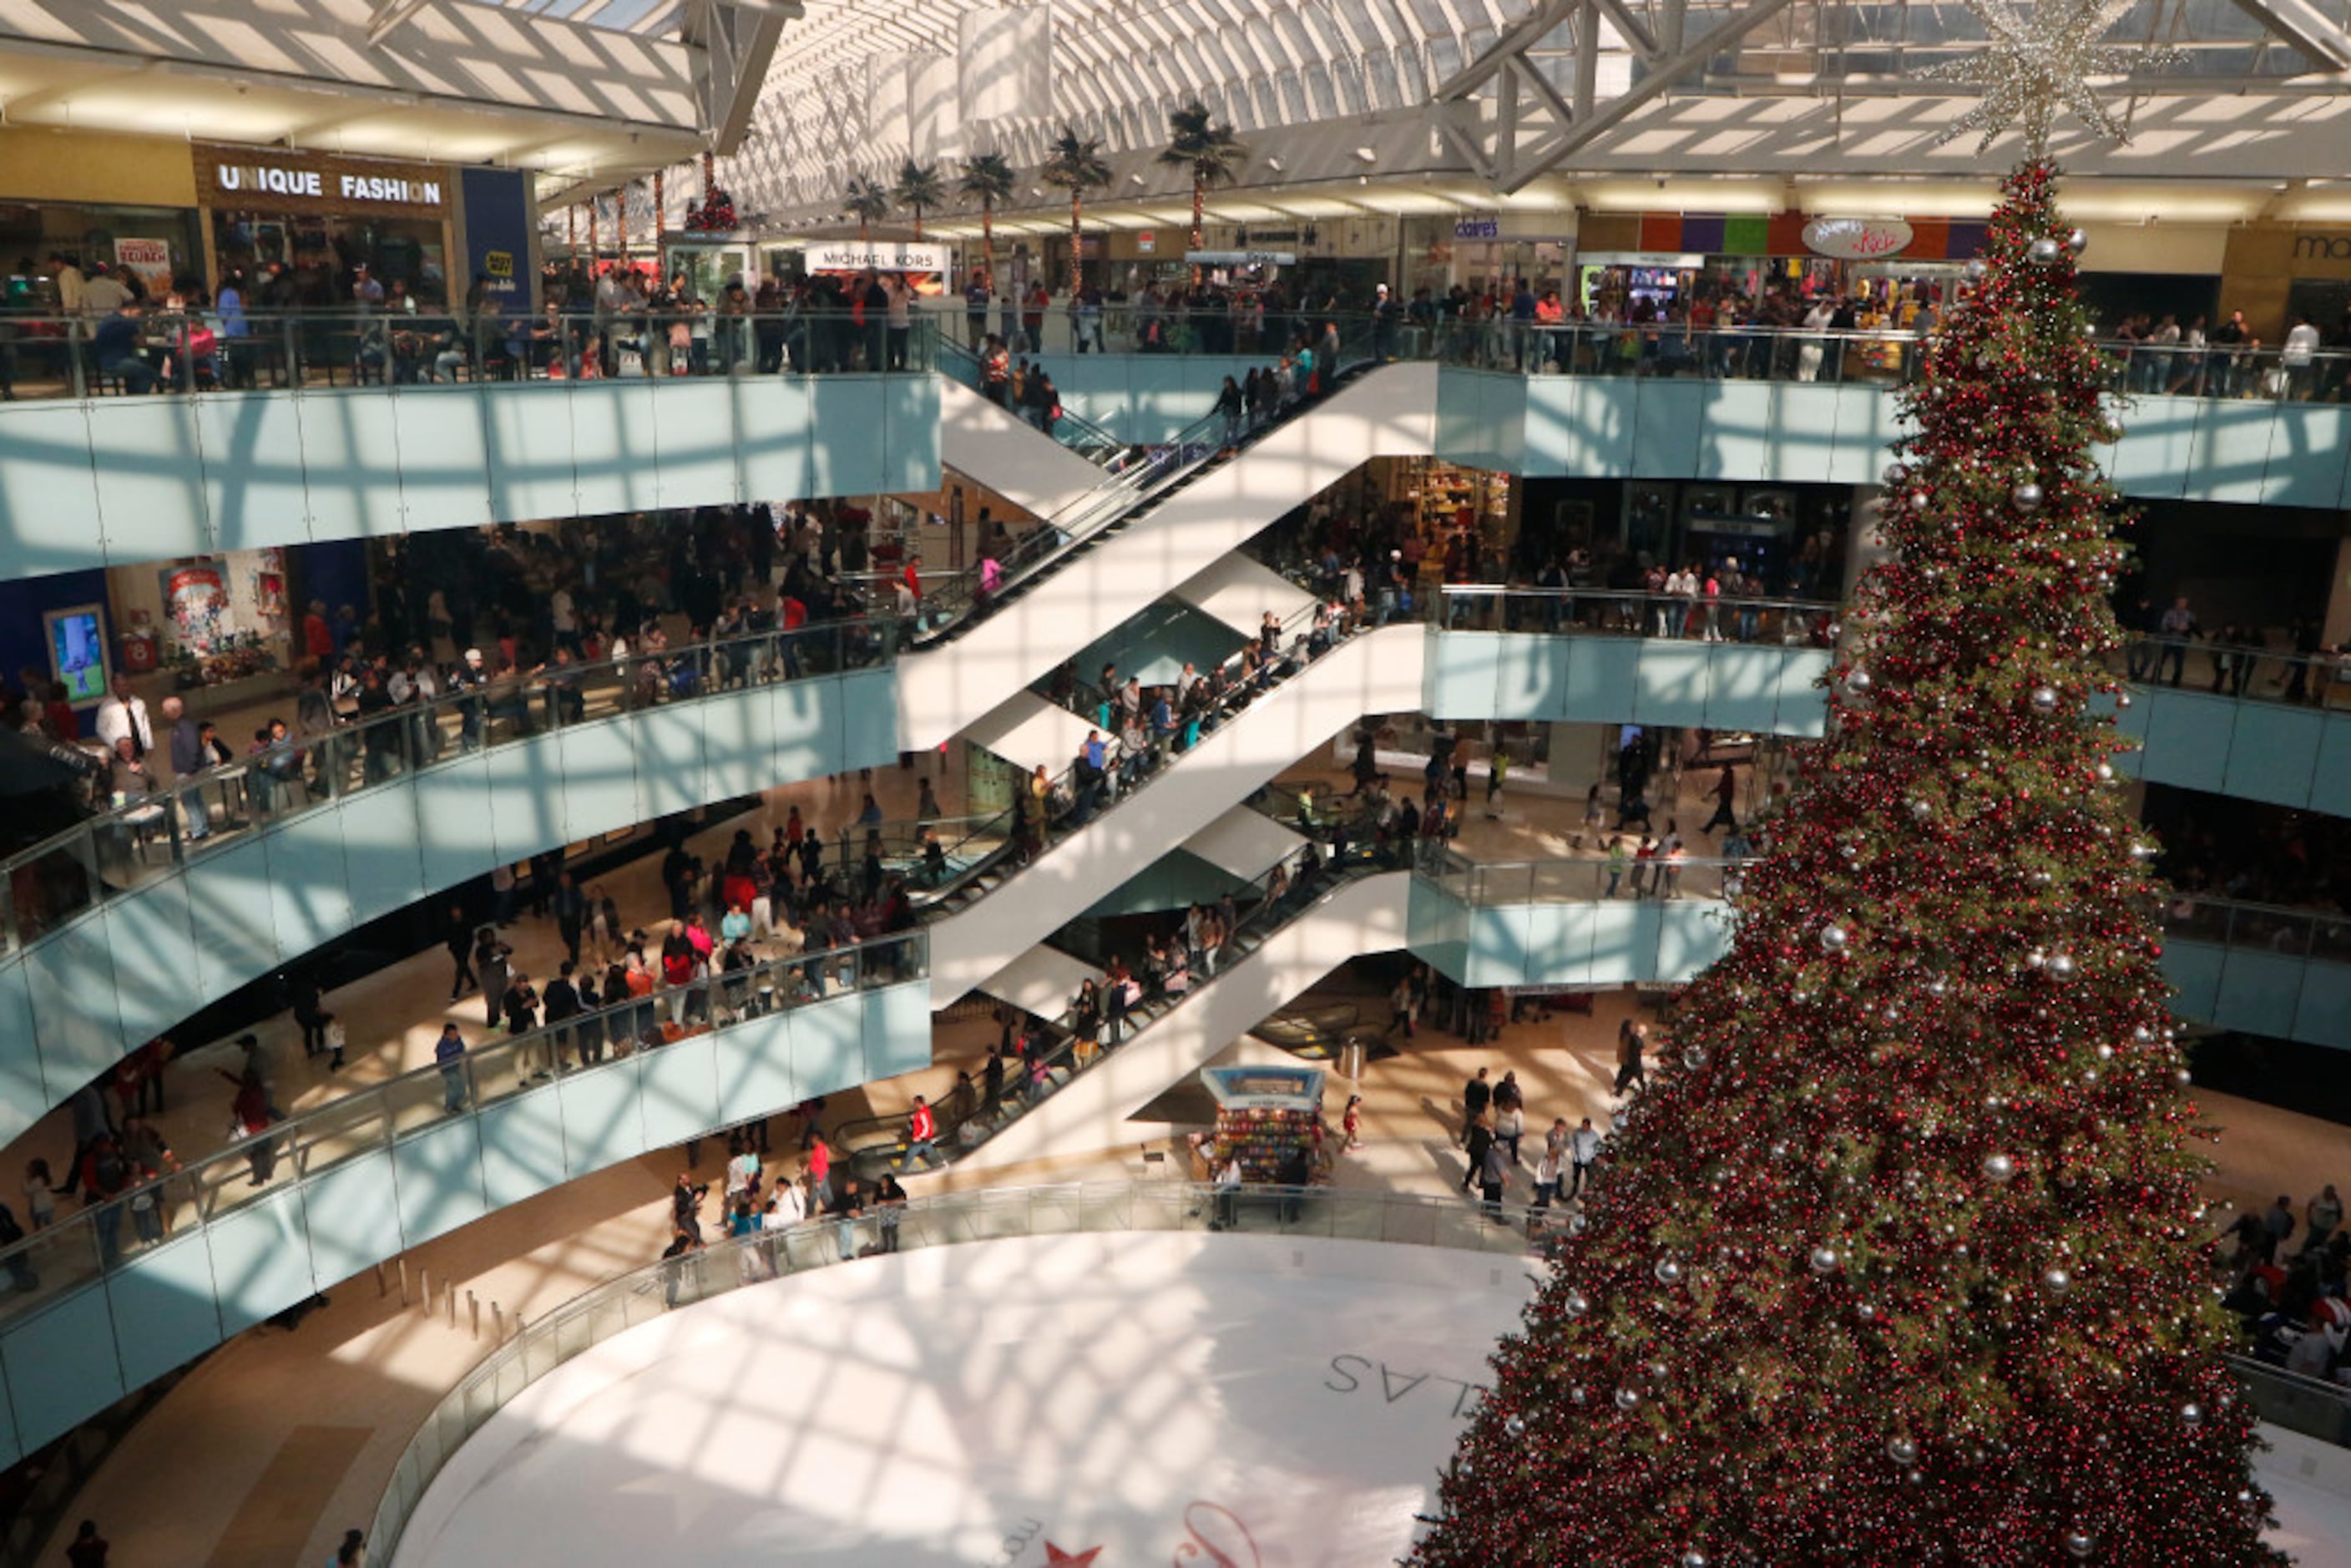 Lender takes over ownership of Dallas' landmark Galleria mall